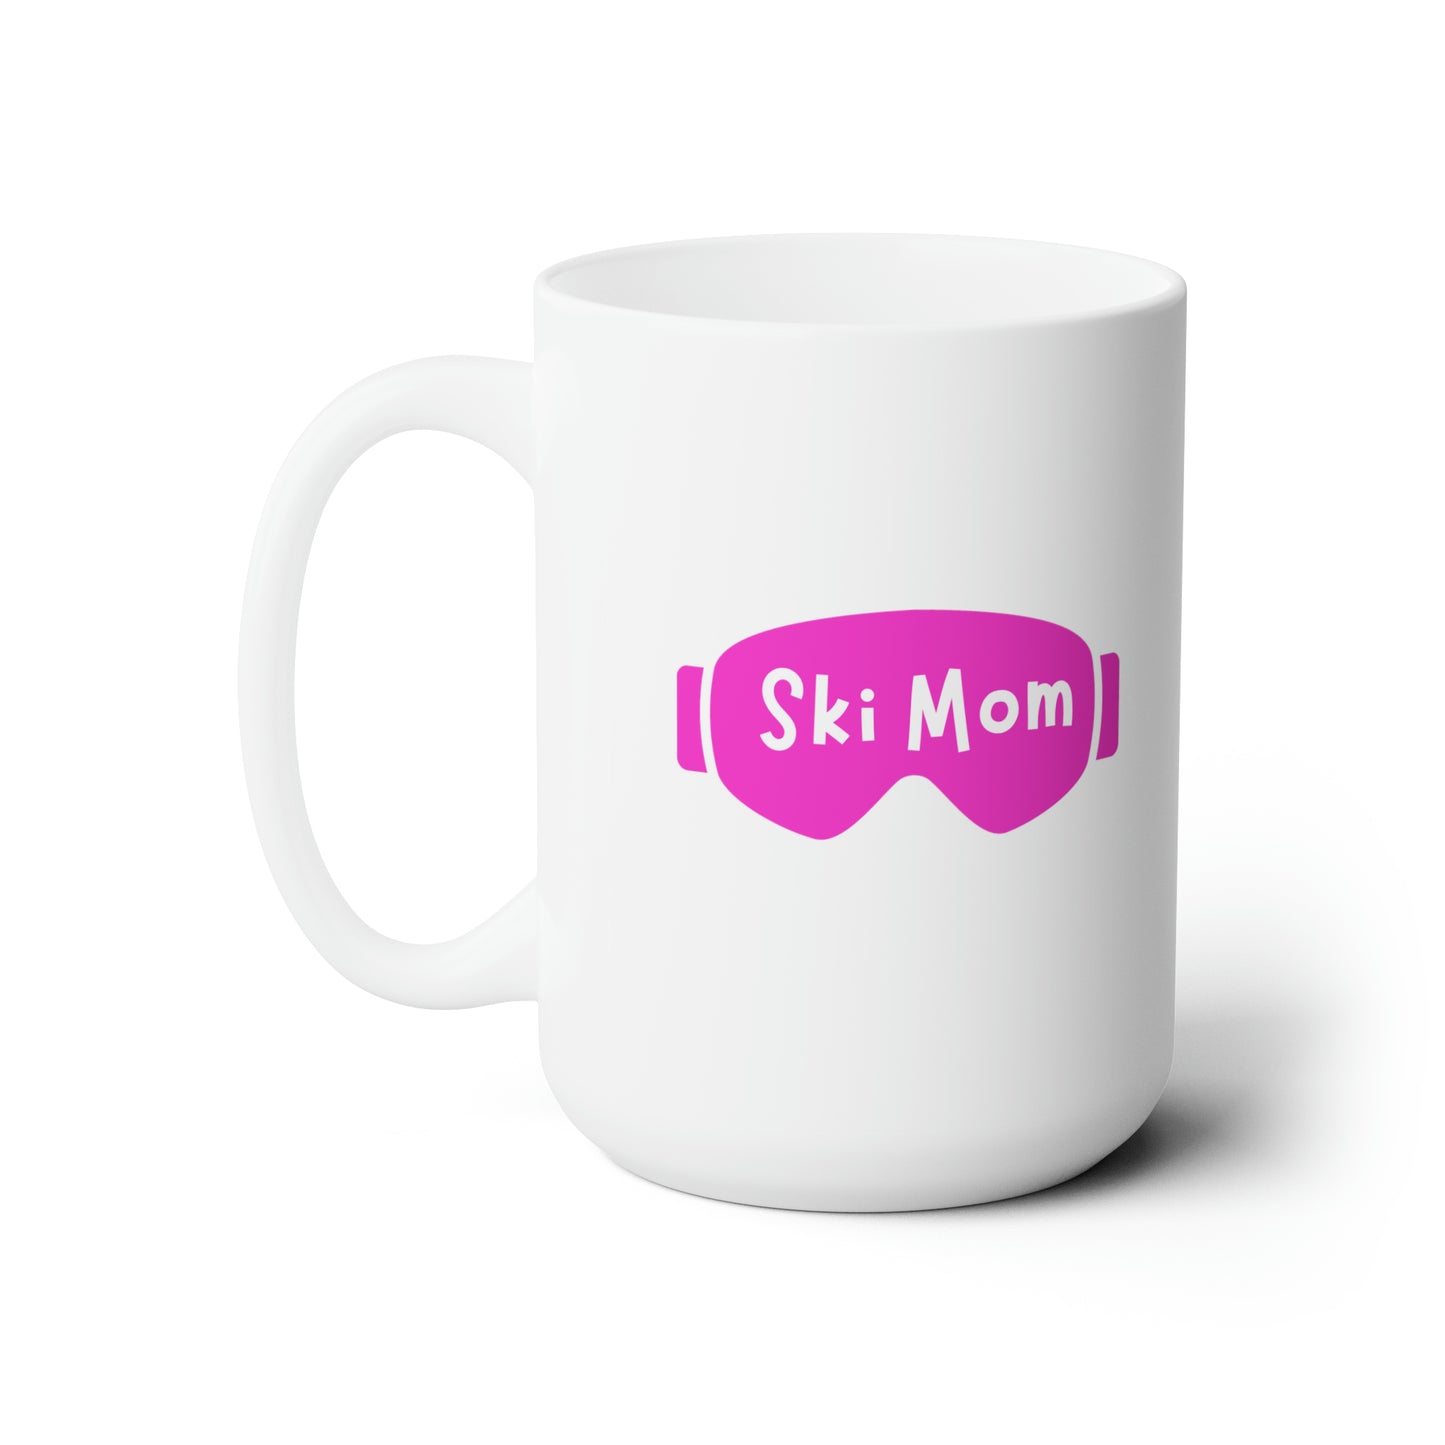 LARGE Pink Ski Mom Ceramic Mug 15oz